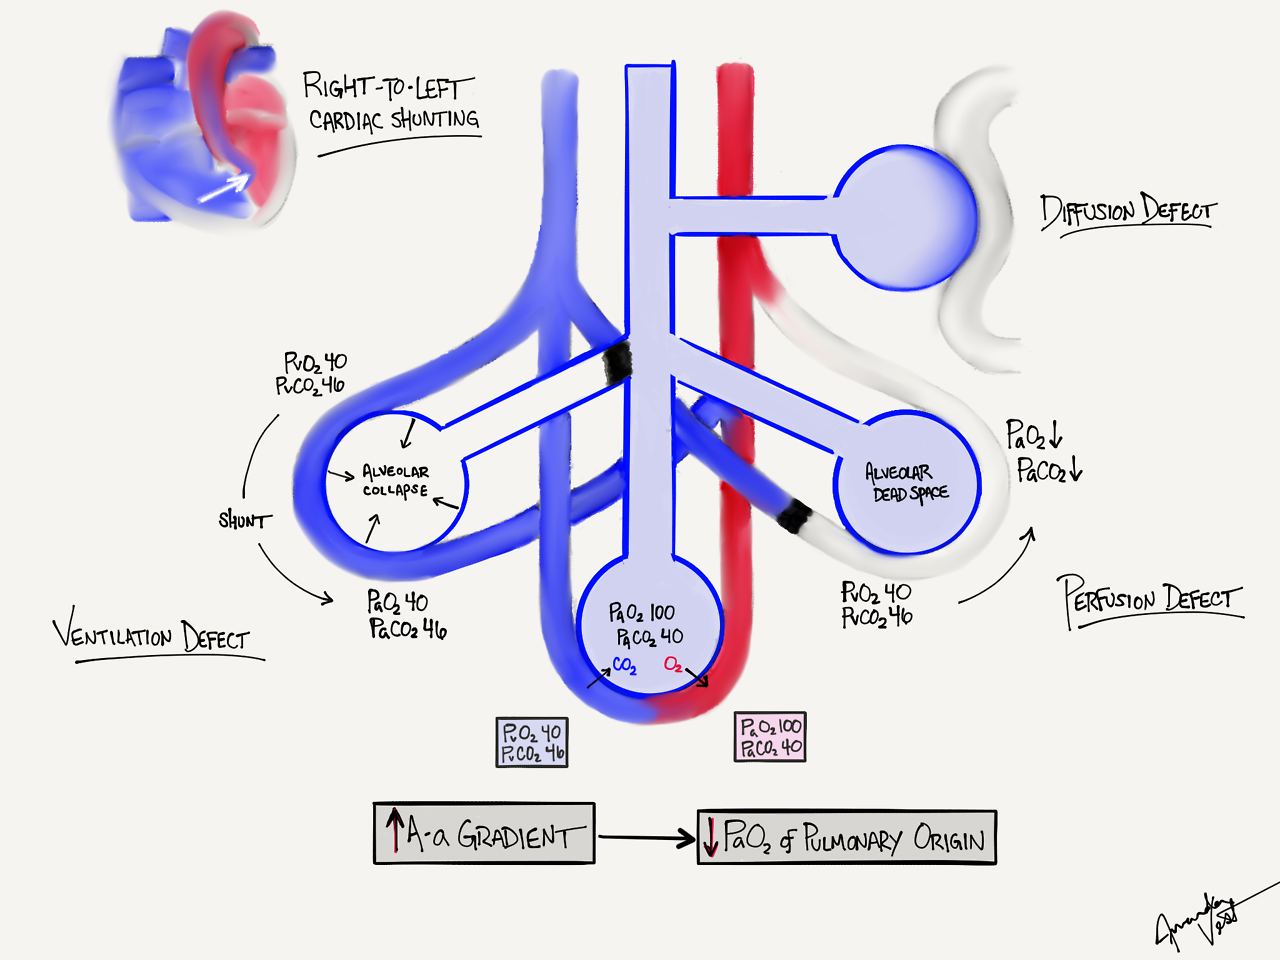 alveolar dead space and pulmonary embolism